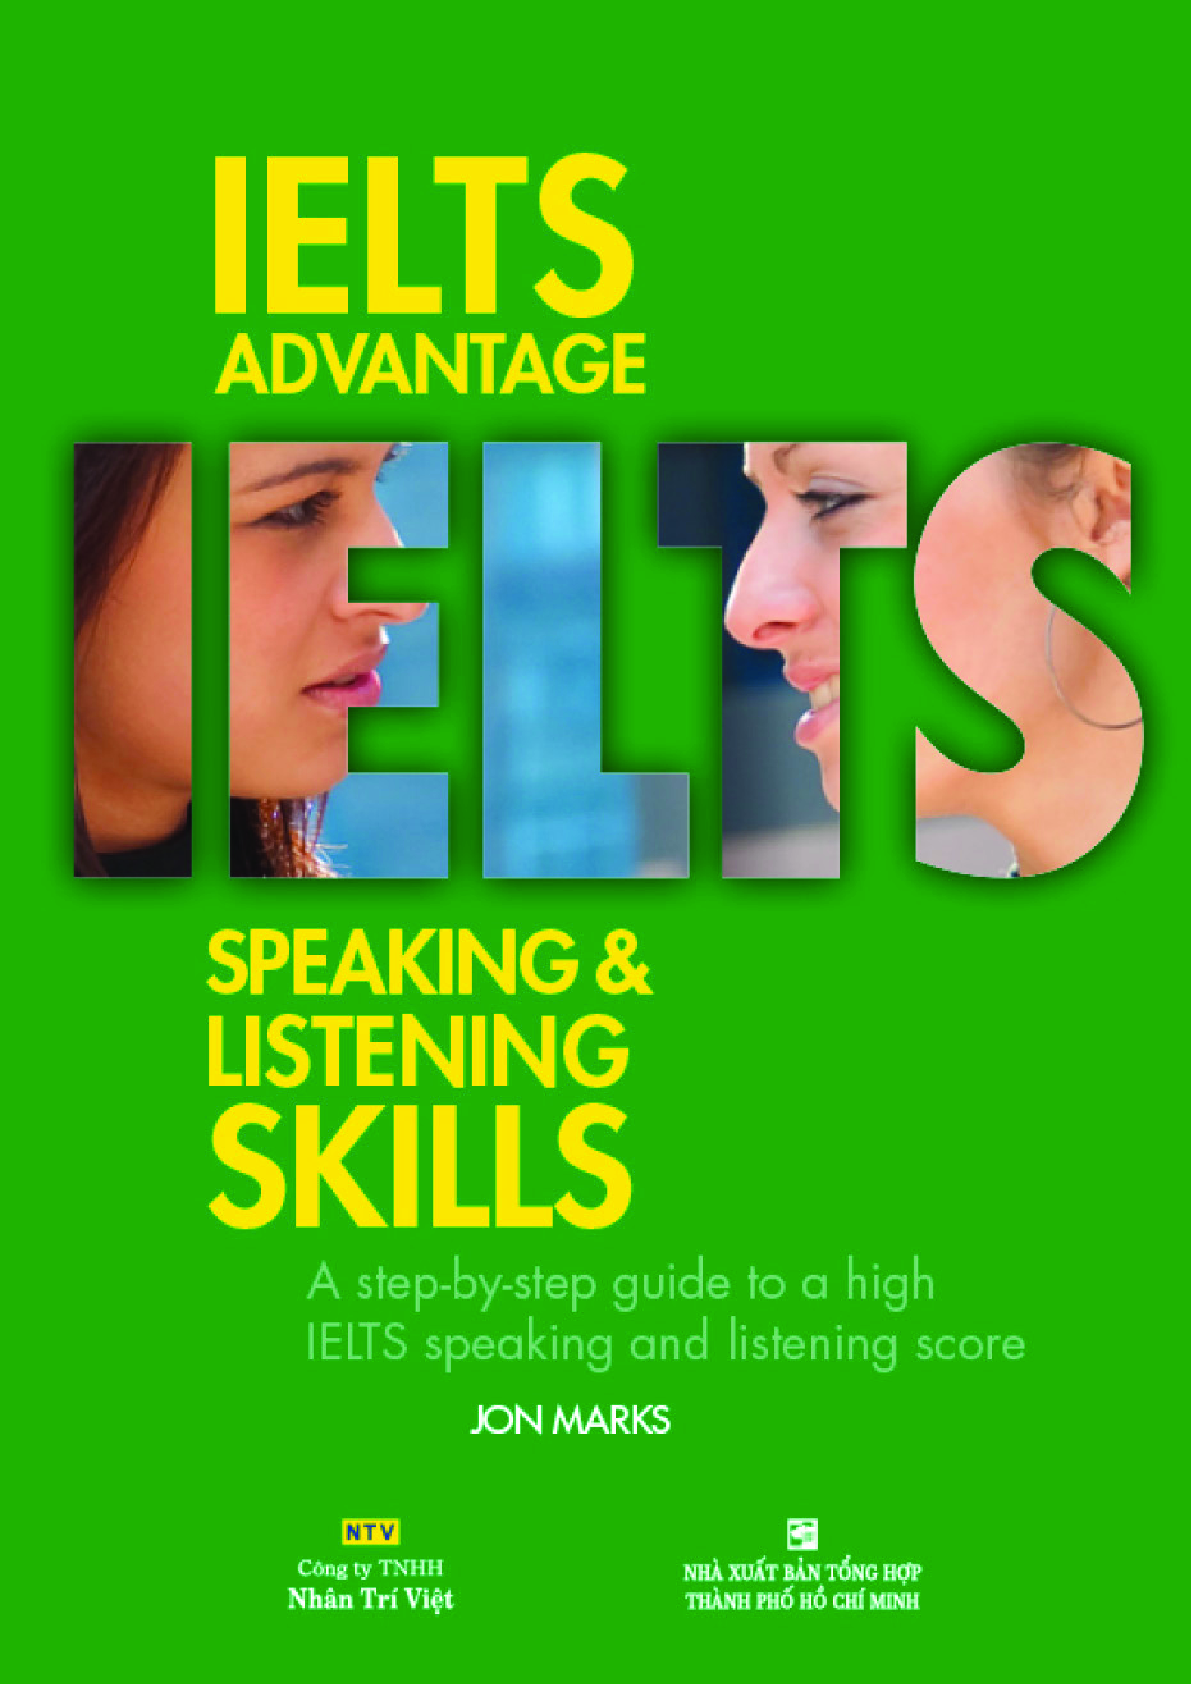 Sách IELTS Advantage Speaking & Listening Skills pdf | Xem online, tải PDF miễn phí (trang 1)